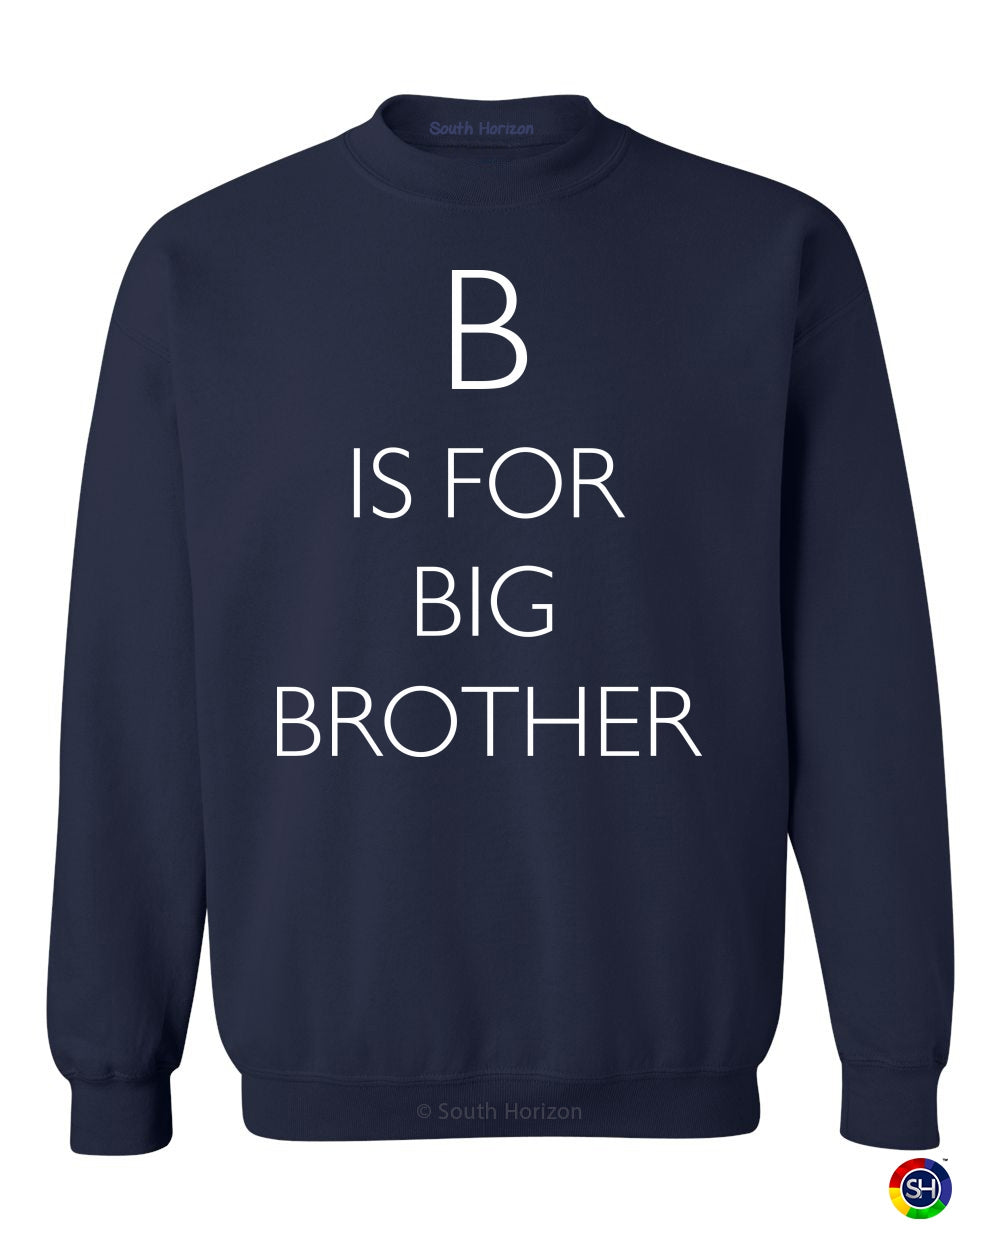 B is for Big Brother on SweatShirt (#1179-11)